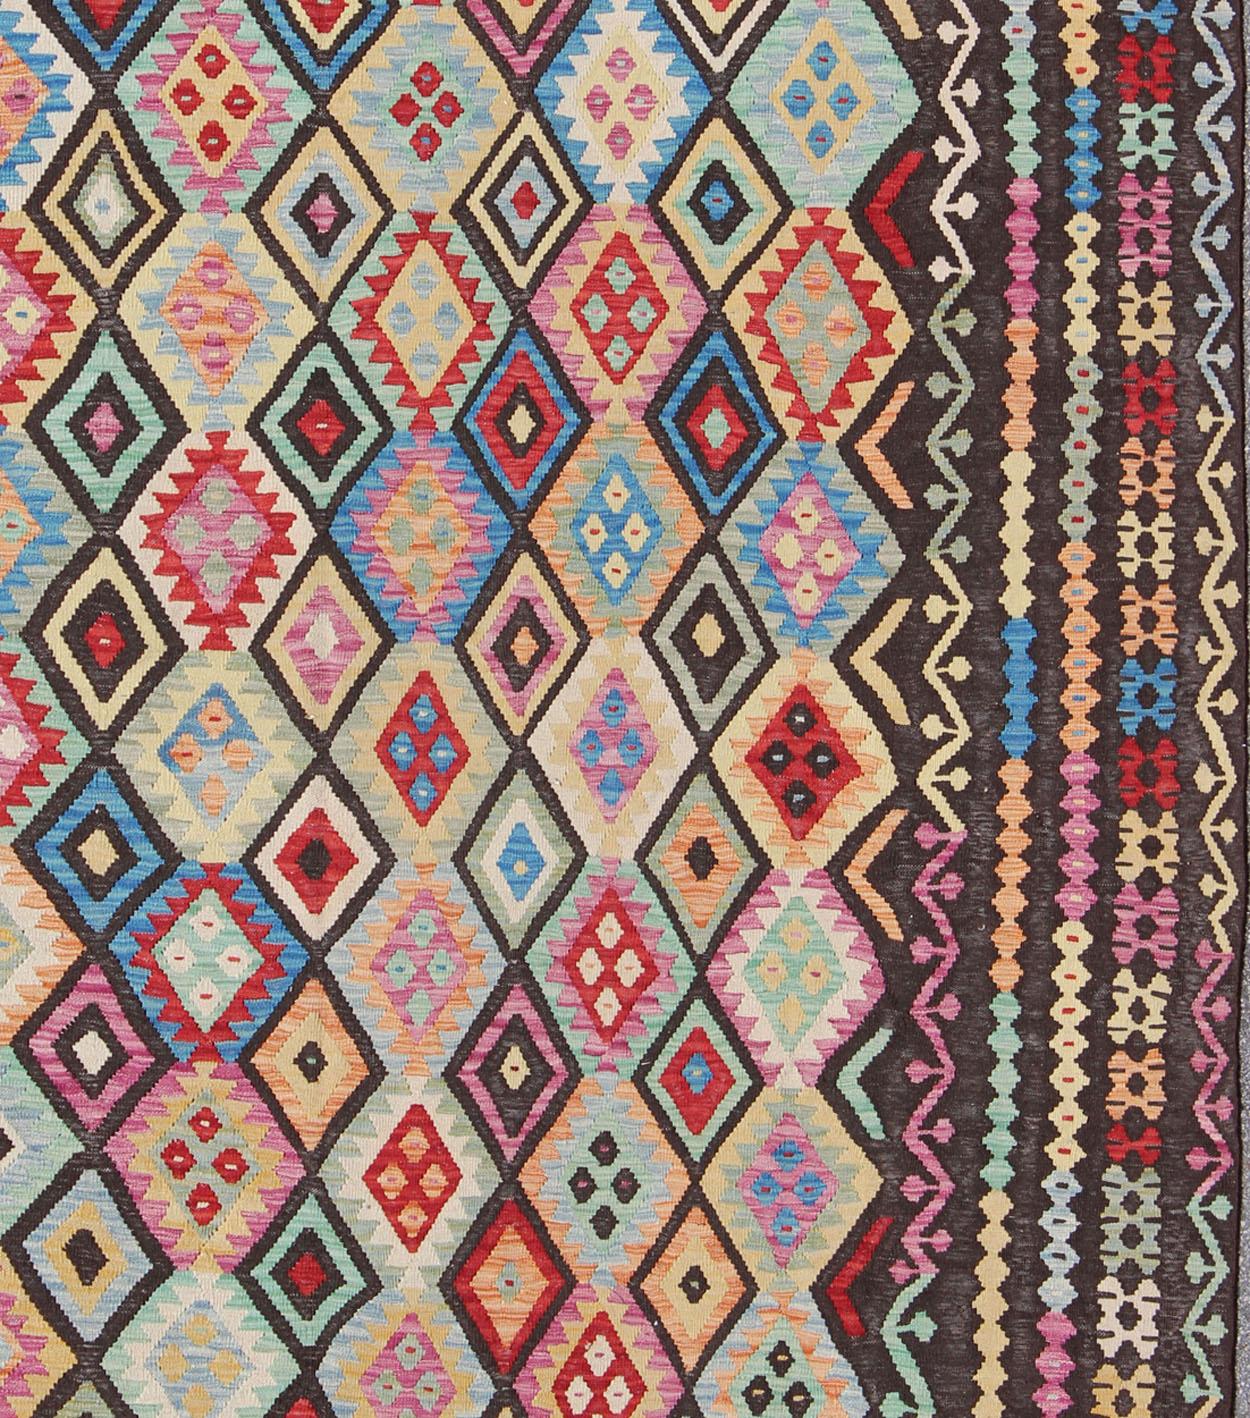 Colorful Tribal Vintage Kilim, rug ABT-8120937, country of origin / type: Afghanistan / Kilim, circa late-20th Century. Keivan Woven Arts, Afghan Kilim Rug. 

This flat-woven kilim rug from Afghanistan features a bold geometric design consisting of